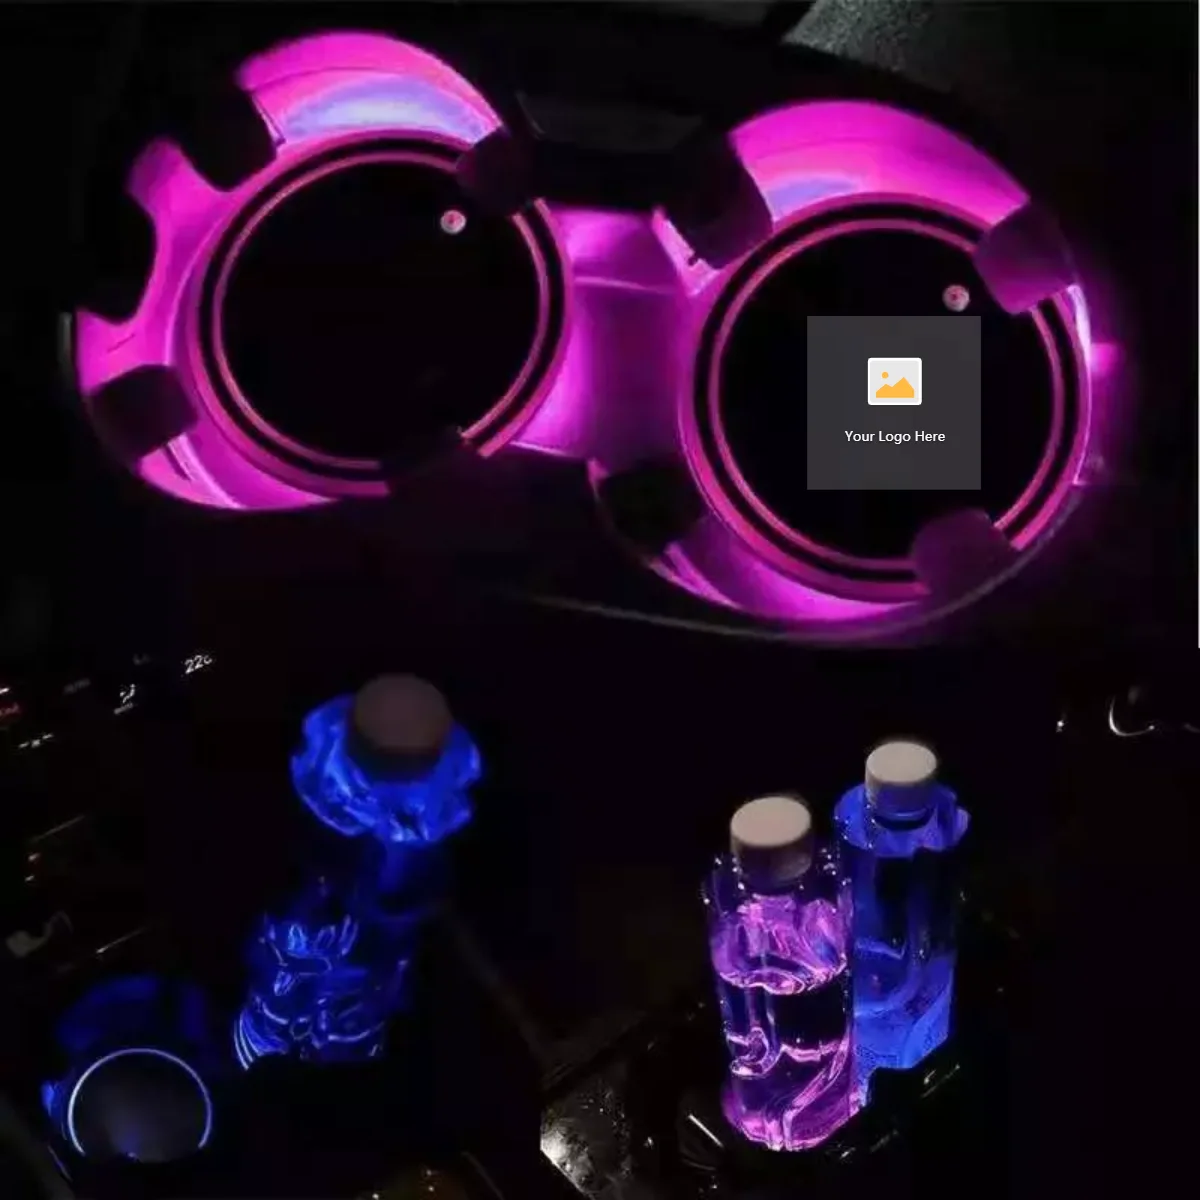 Luce atmosferica HOPQ Tappetini per Auto per portabicchieri di Cane luci LED RGB sottobicchiere per Bevande 